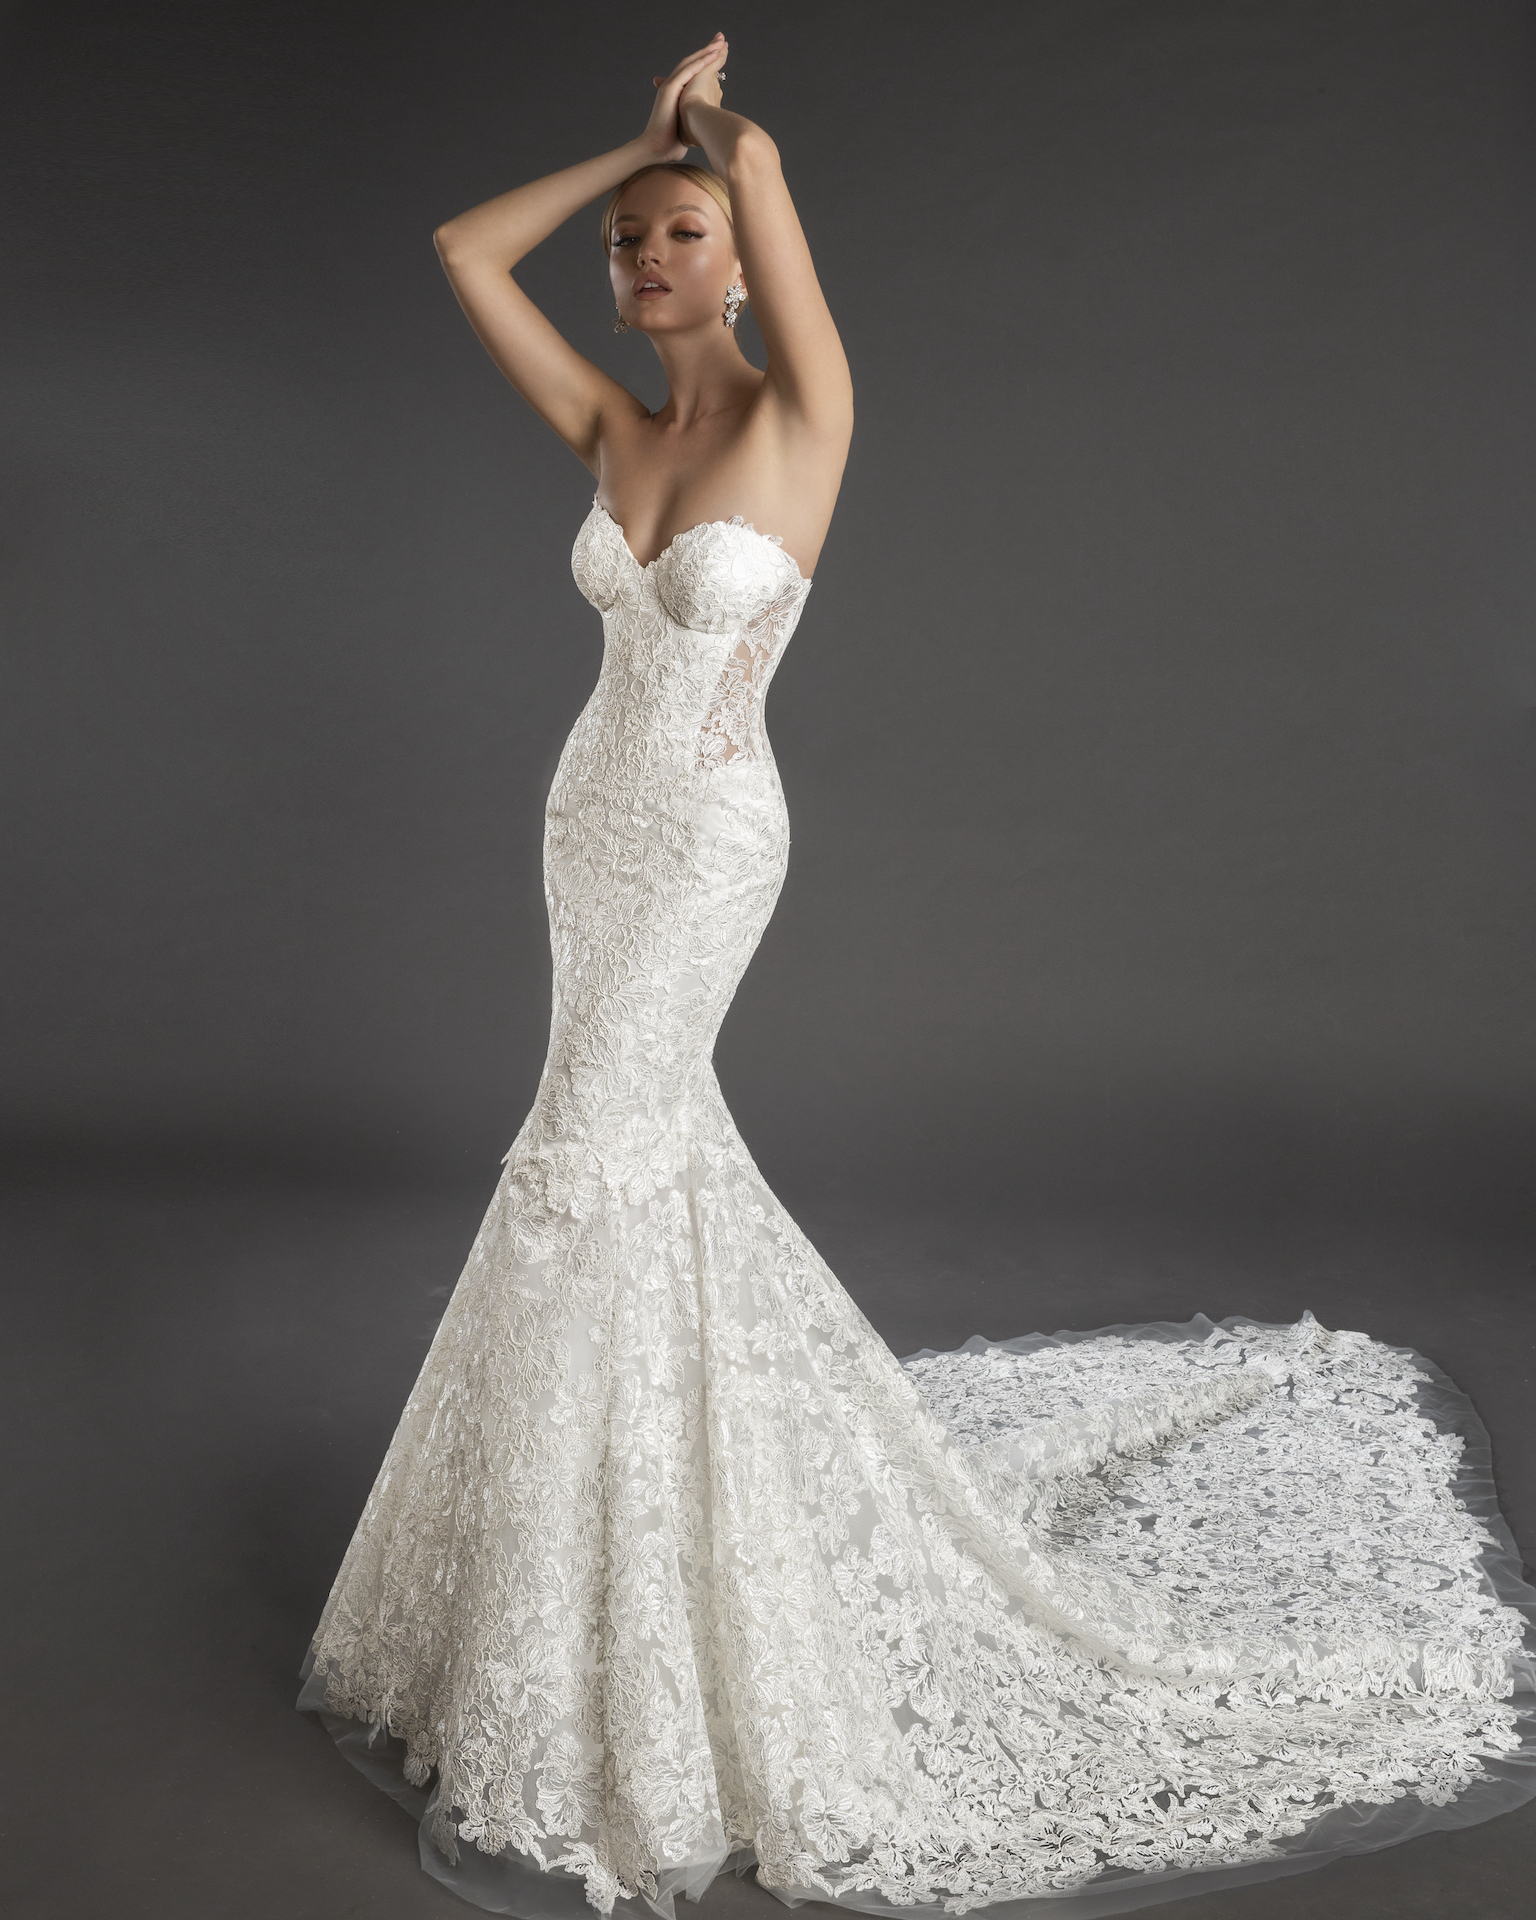 Strapless Sweetheart Neckline Lace Mermaid Wedding Dress Kleinfeld Bridal 6773